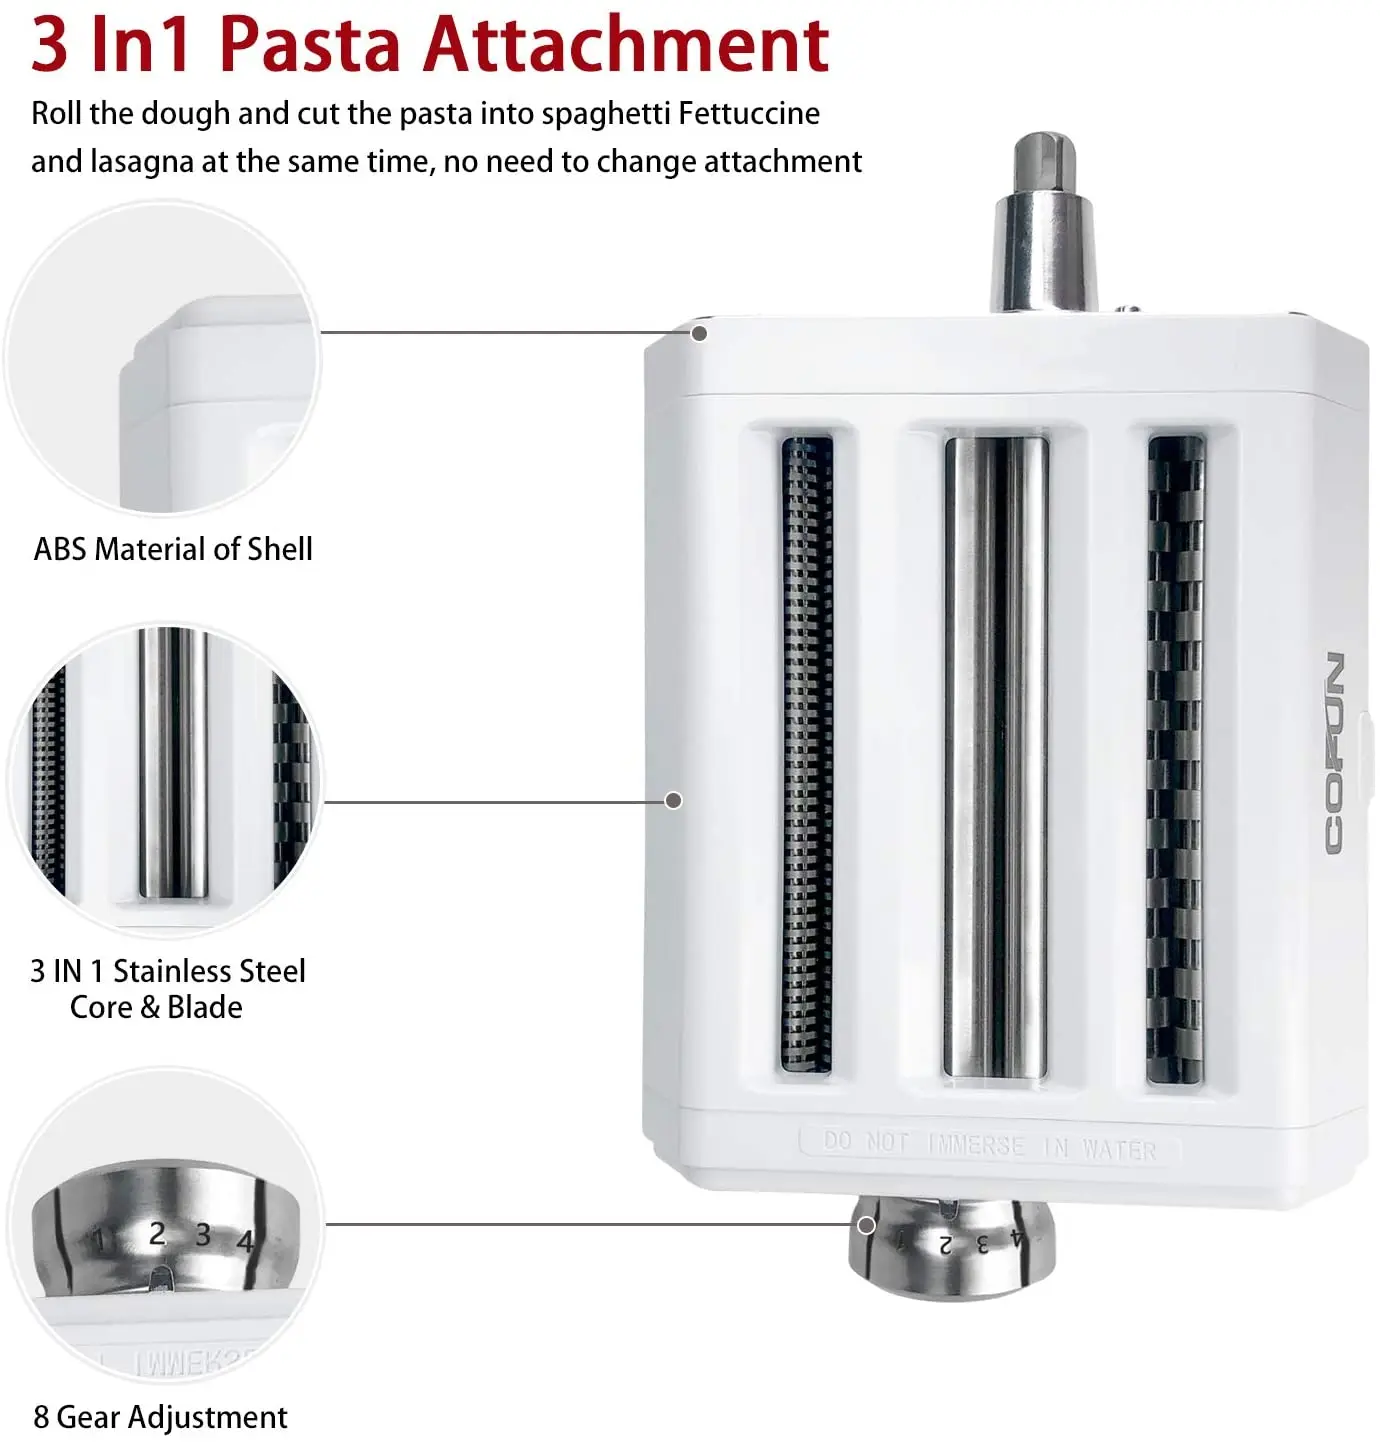 Pasta Maker Attachment for Kitchenaid Stand Mixer,3 in 1 Pasta Machine  Asseccories, Included Pasta Roller,Fettuccine Cutter - AliExpress